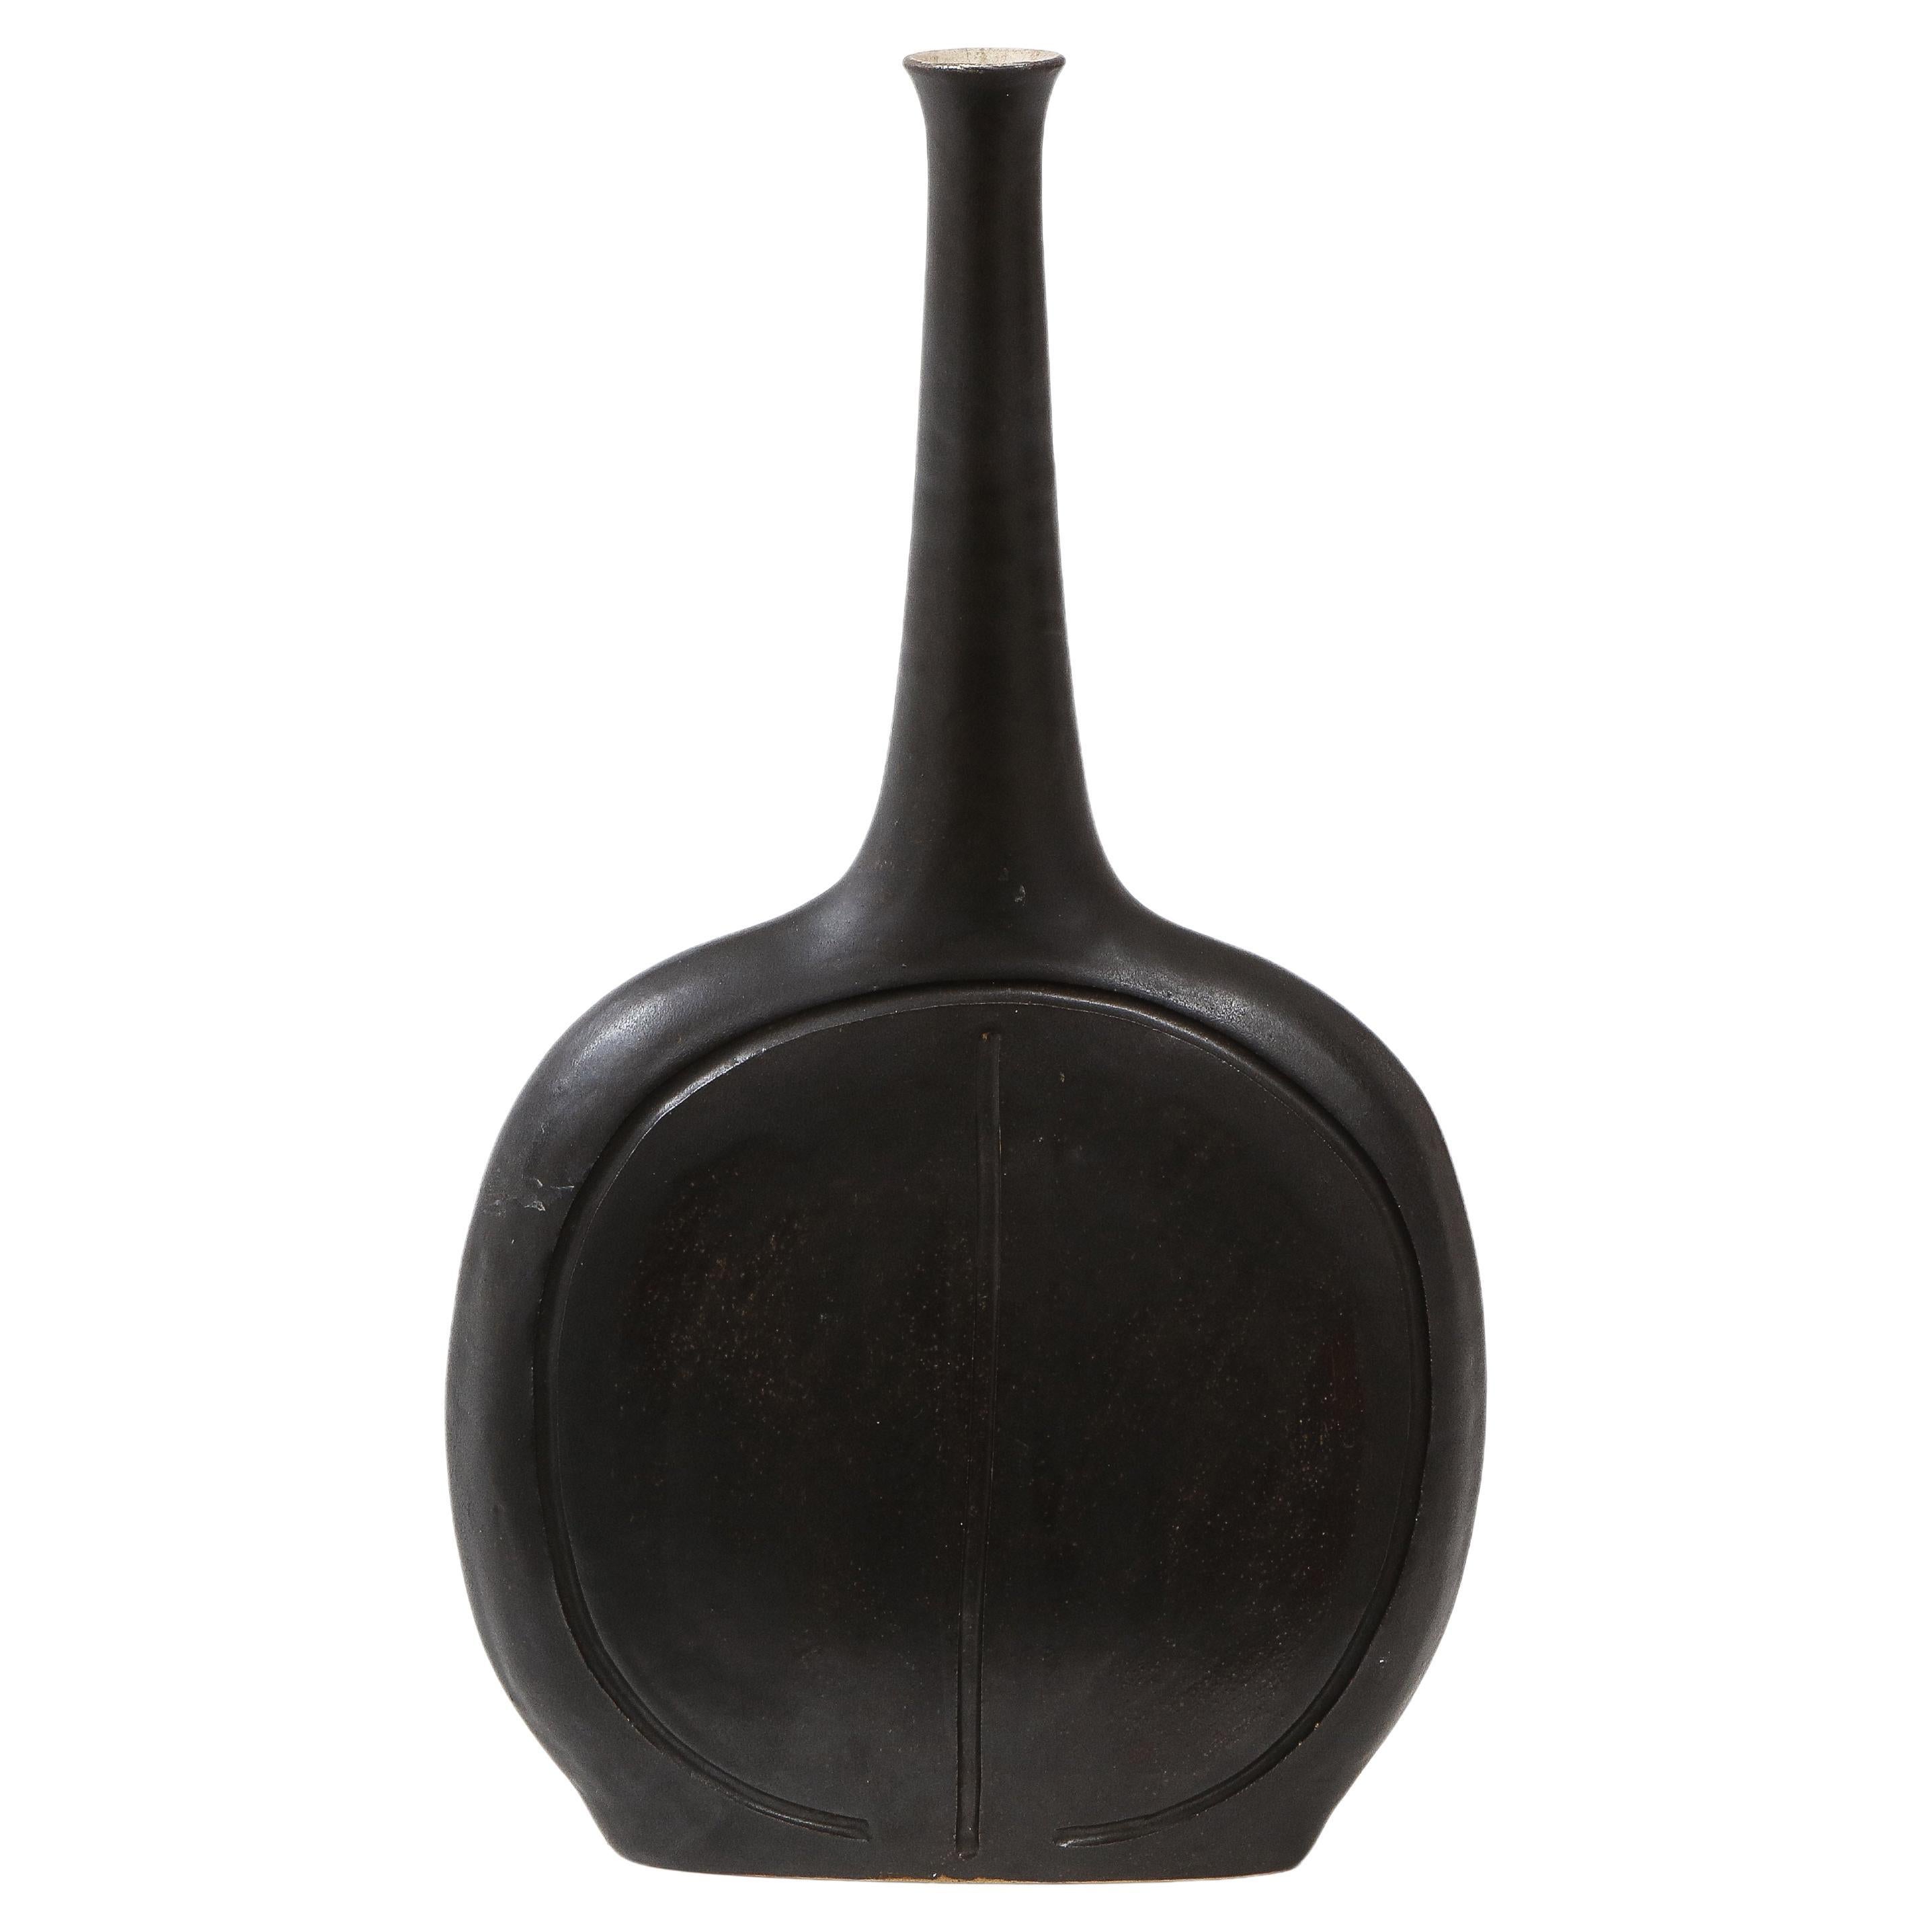 Bruno Gambone Ceramic Vase or Bottle, Italy, 1970s